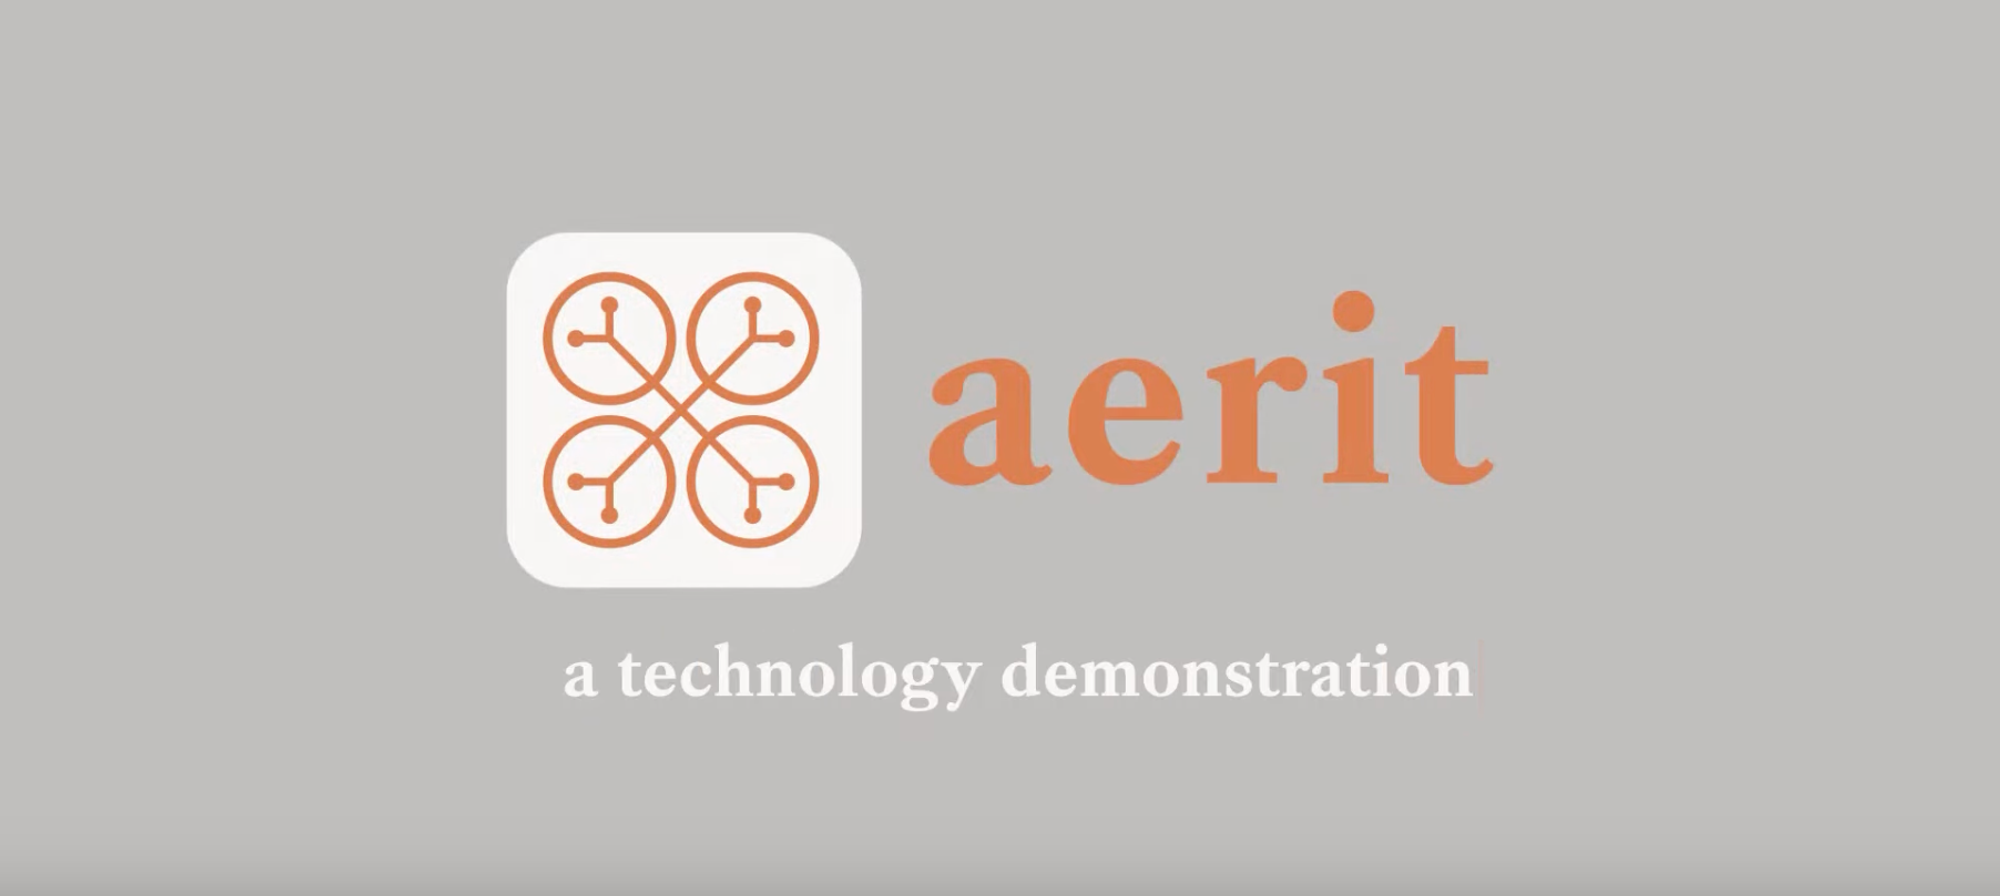 Aerit Releases March Tech Demo